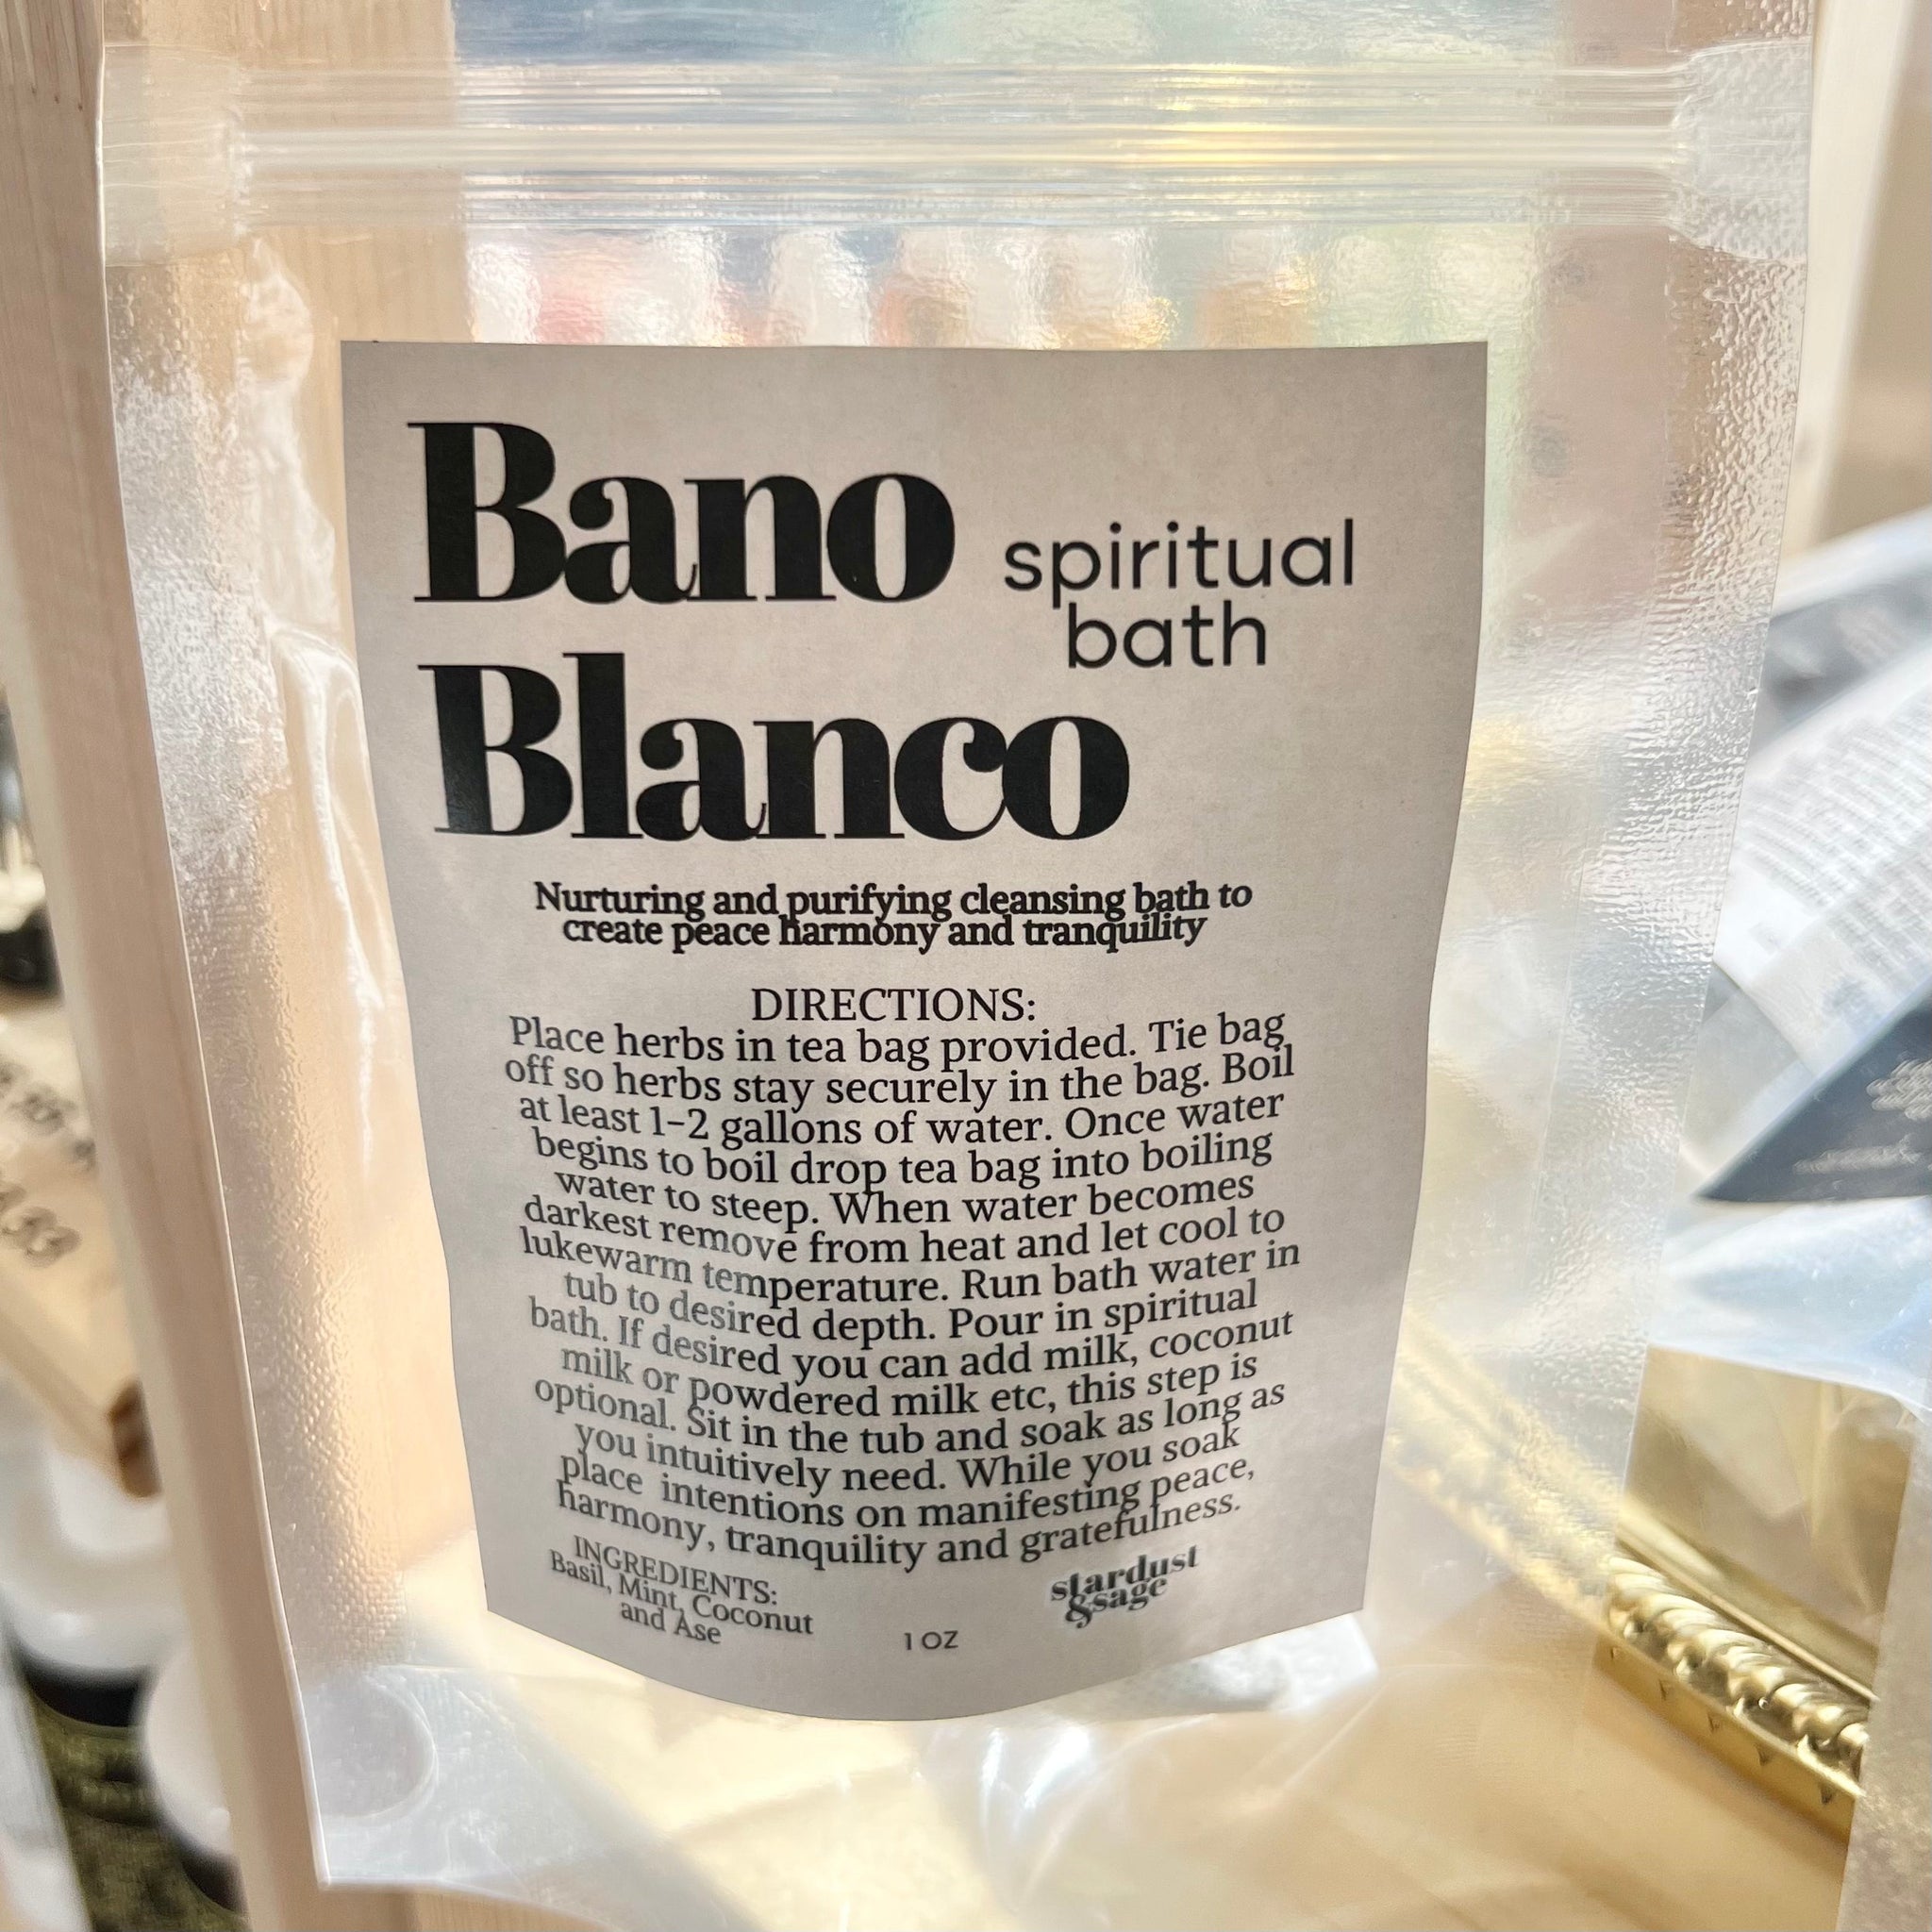 Baño Blanco Spiritual Bath